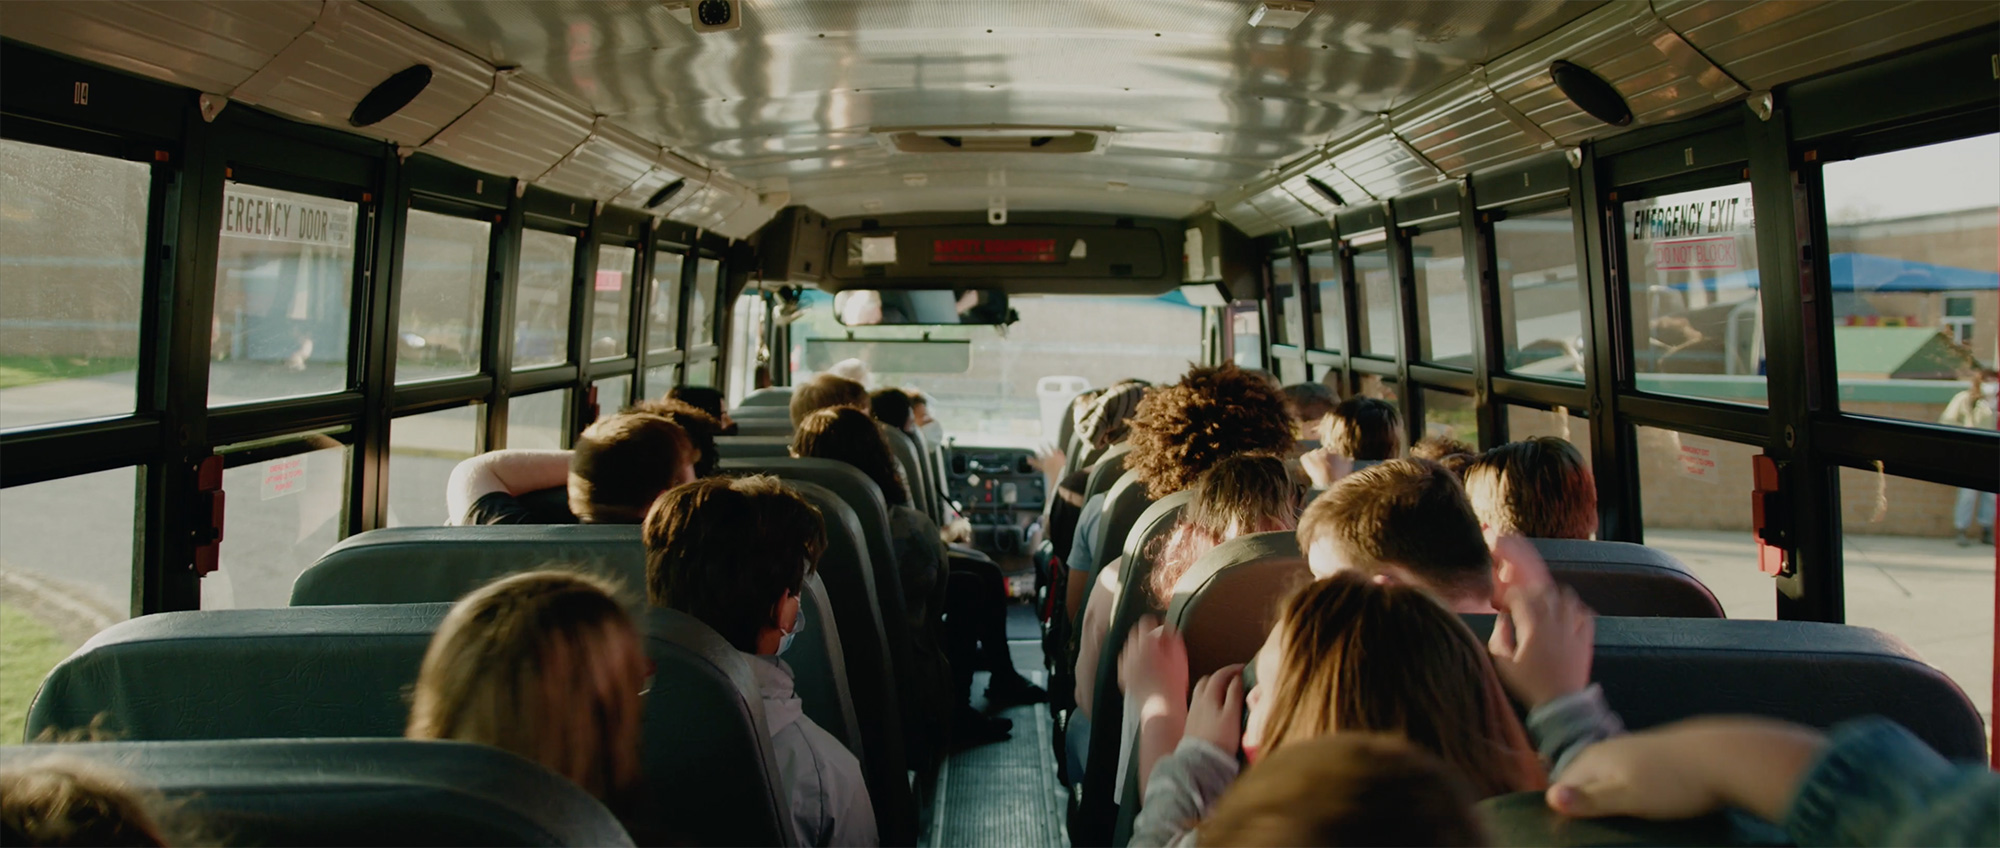 Children riding on a school bus